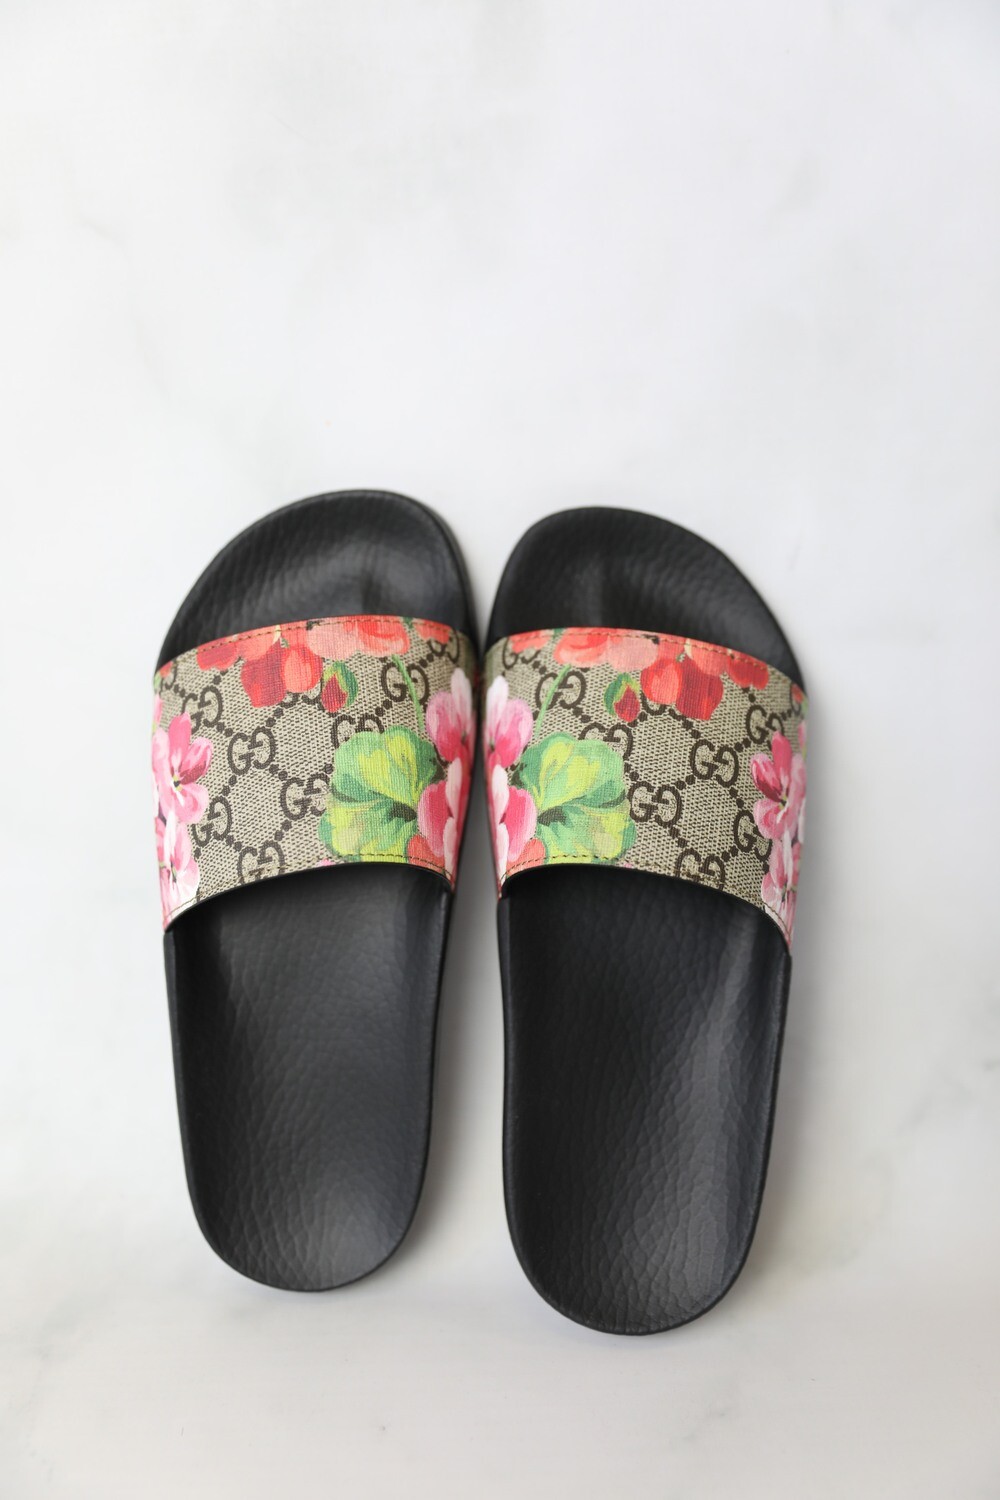 Gucci Shoes Bloom Slide Sandals, Size 36, New in Box WA001 - Julia Rose  Boston | Shop